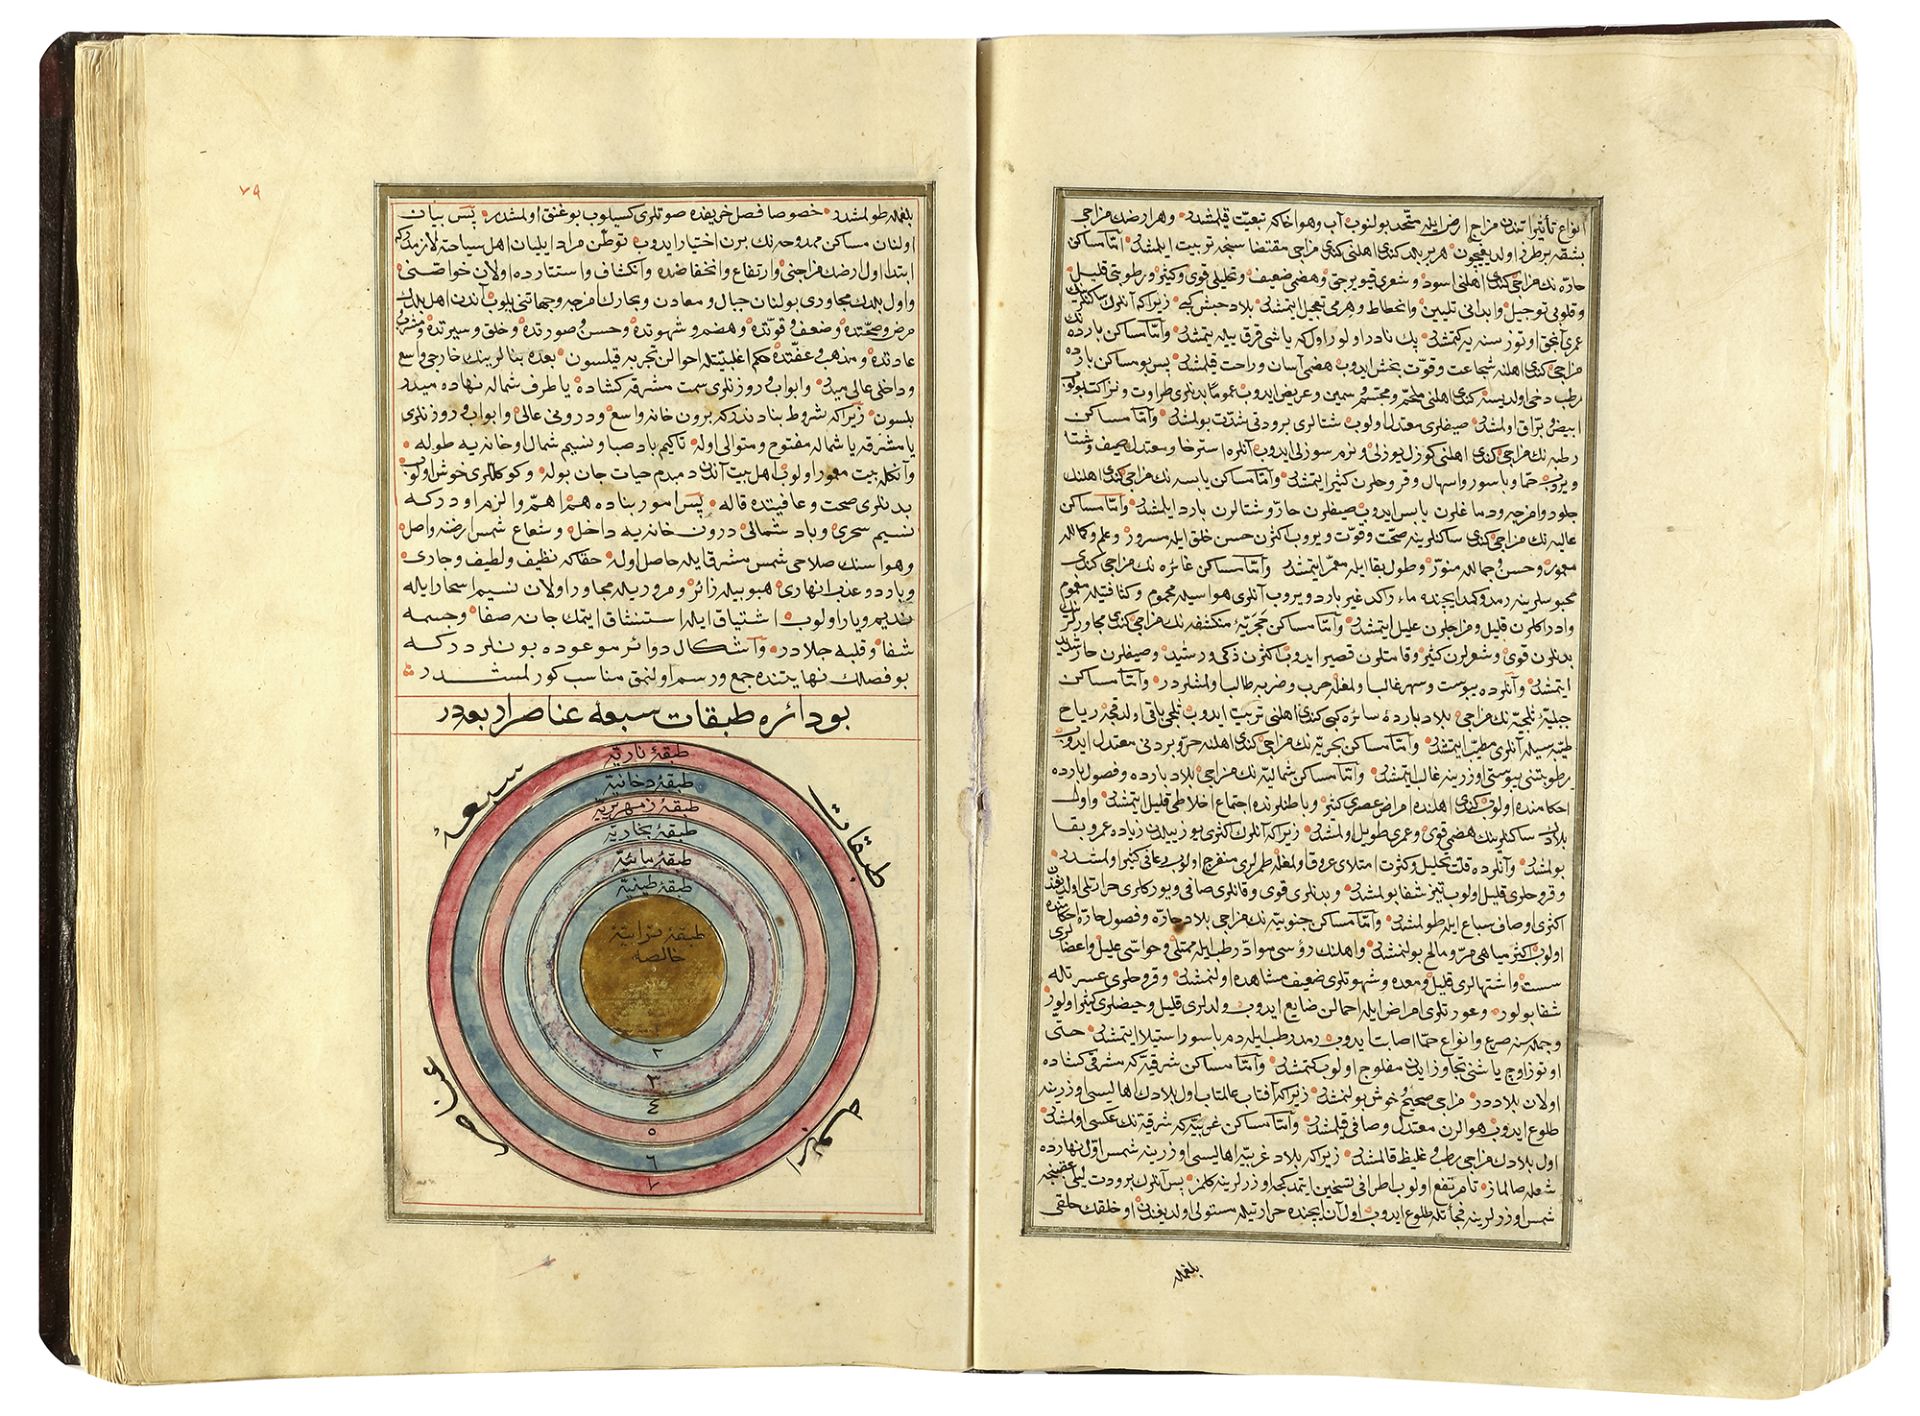 MARIFETNAME, IBRAHIM HAKKI, COPIED BY SAE'D ALLAH BIN ALI BIN AHMED, TURKEY, 1221 AH/1806 AD - Image 33 of 58